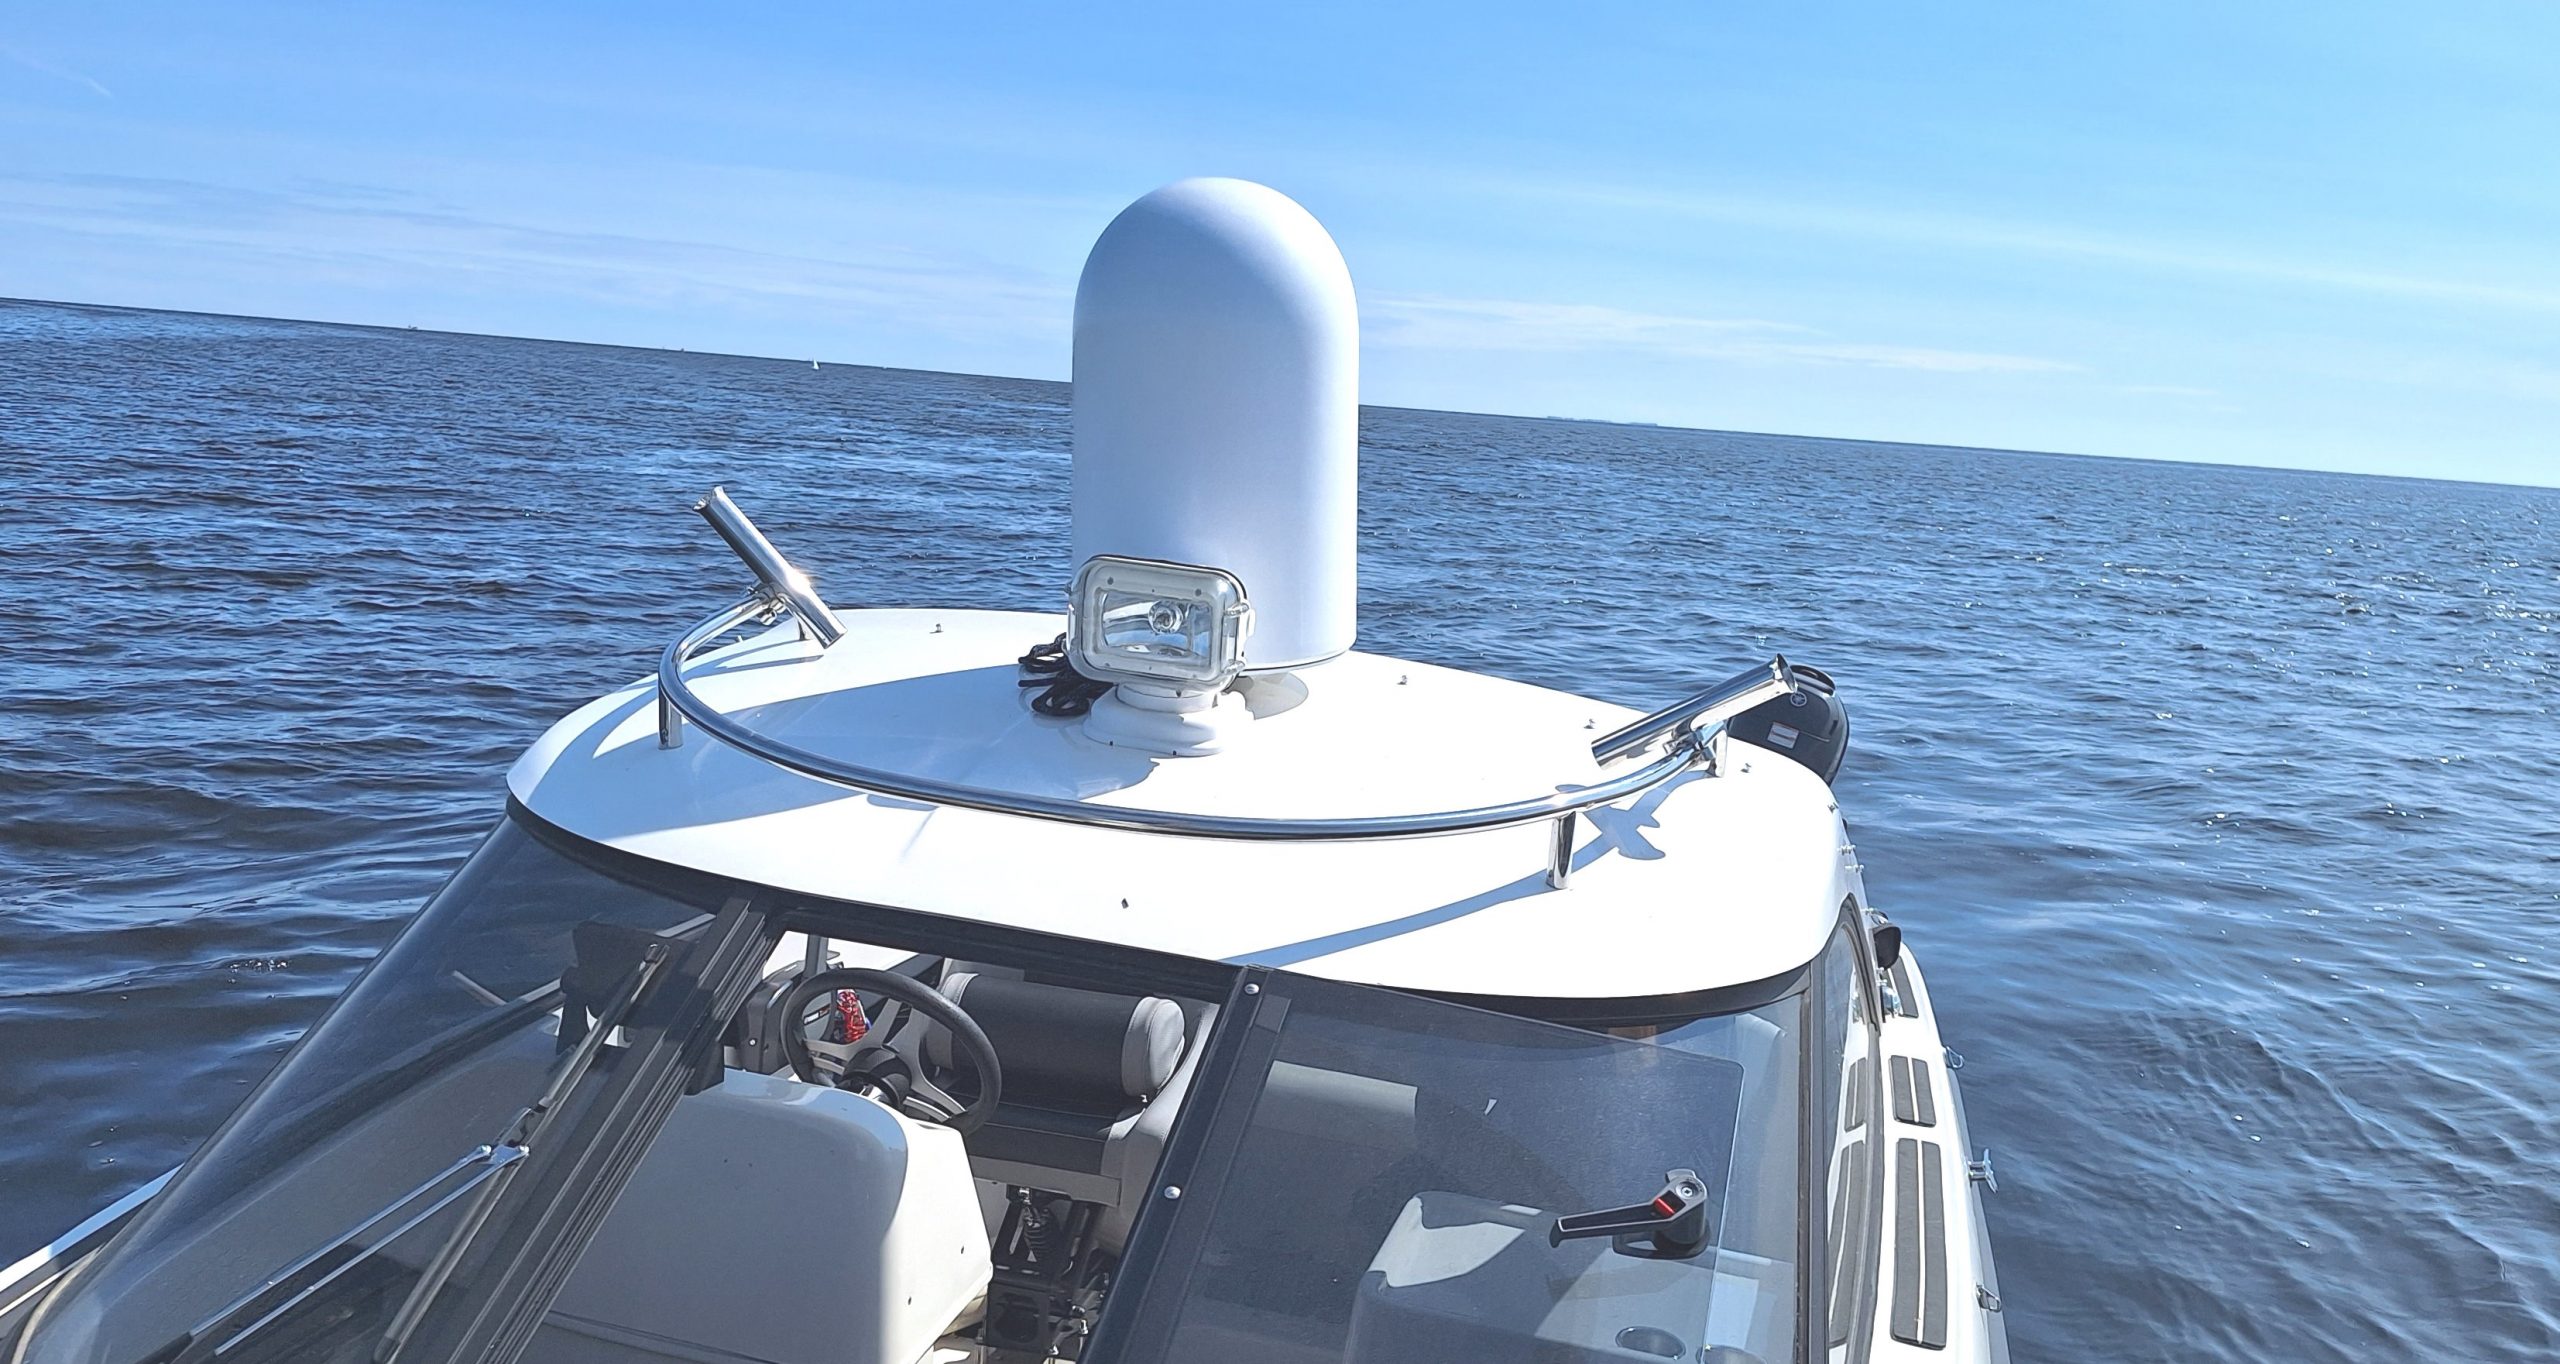 Millimeter Wave Marine Radar for Drone Boats (USV and ASV) - Millimeter  wave components and systems, waveguide antennas, standard gain horns, MM  wave radars - ELVA-1